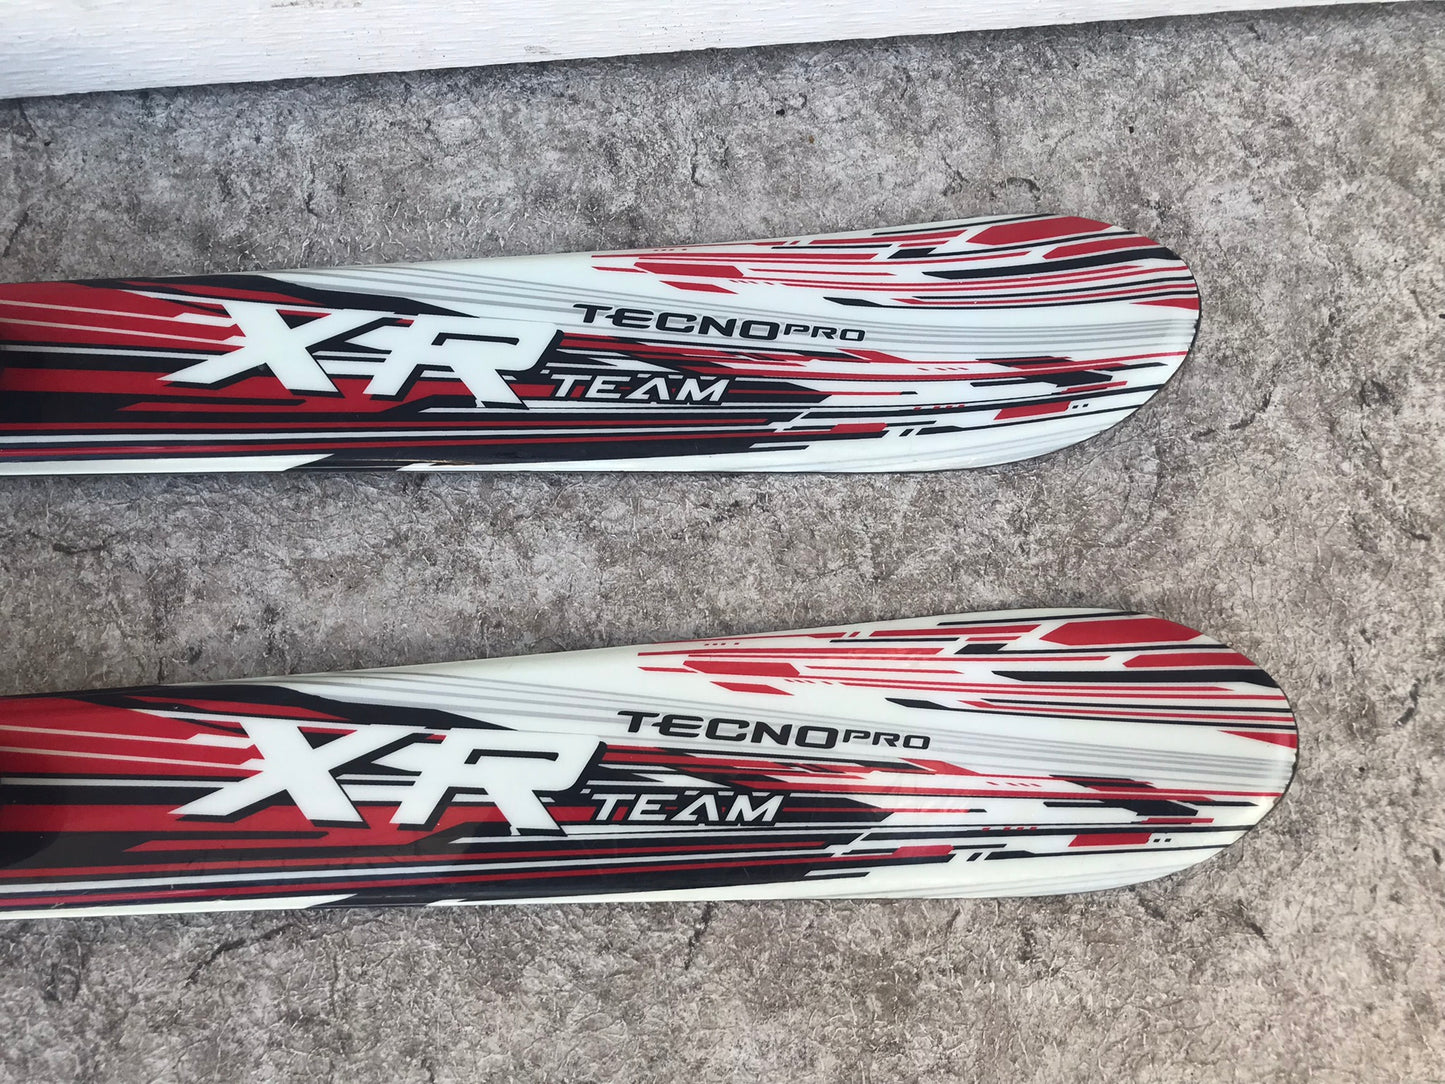 Ski 110 Tecno X Team Parabolic Red Black White With Bindings